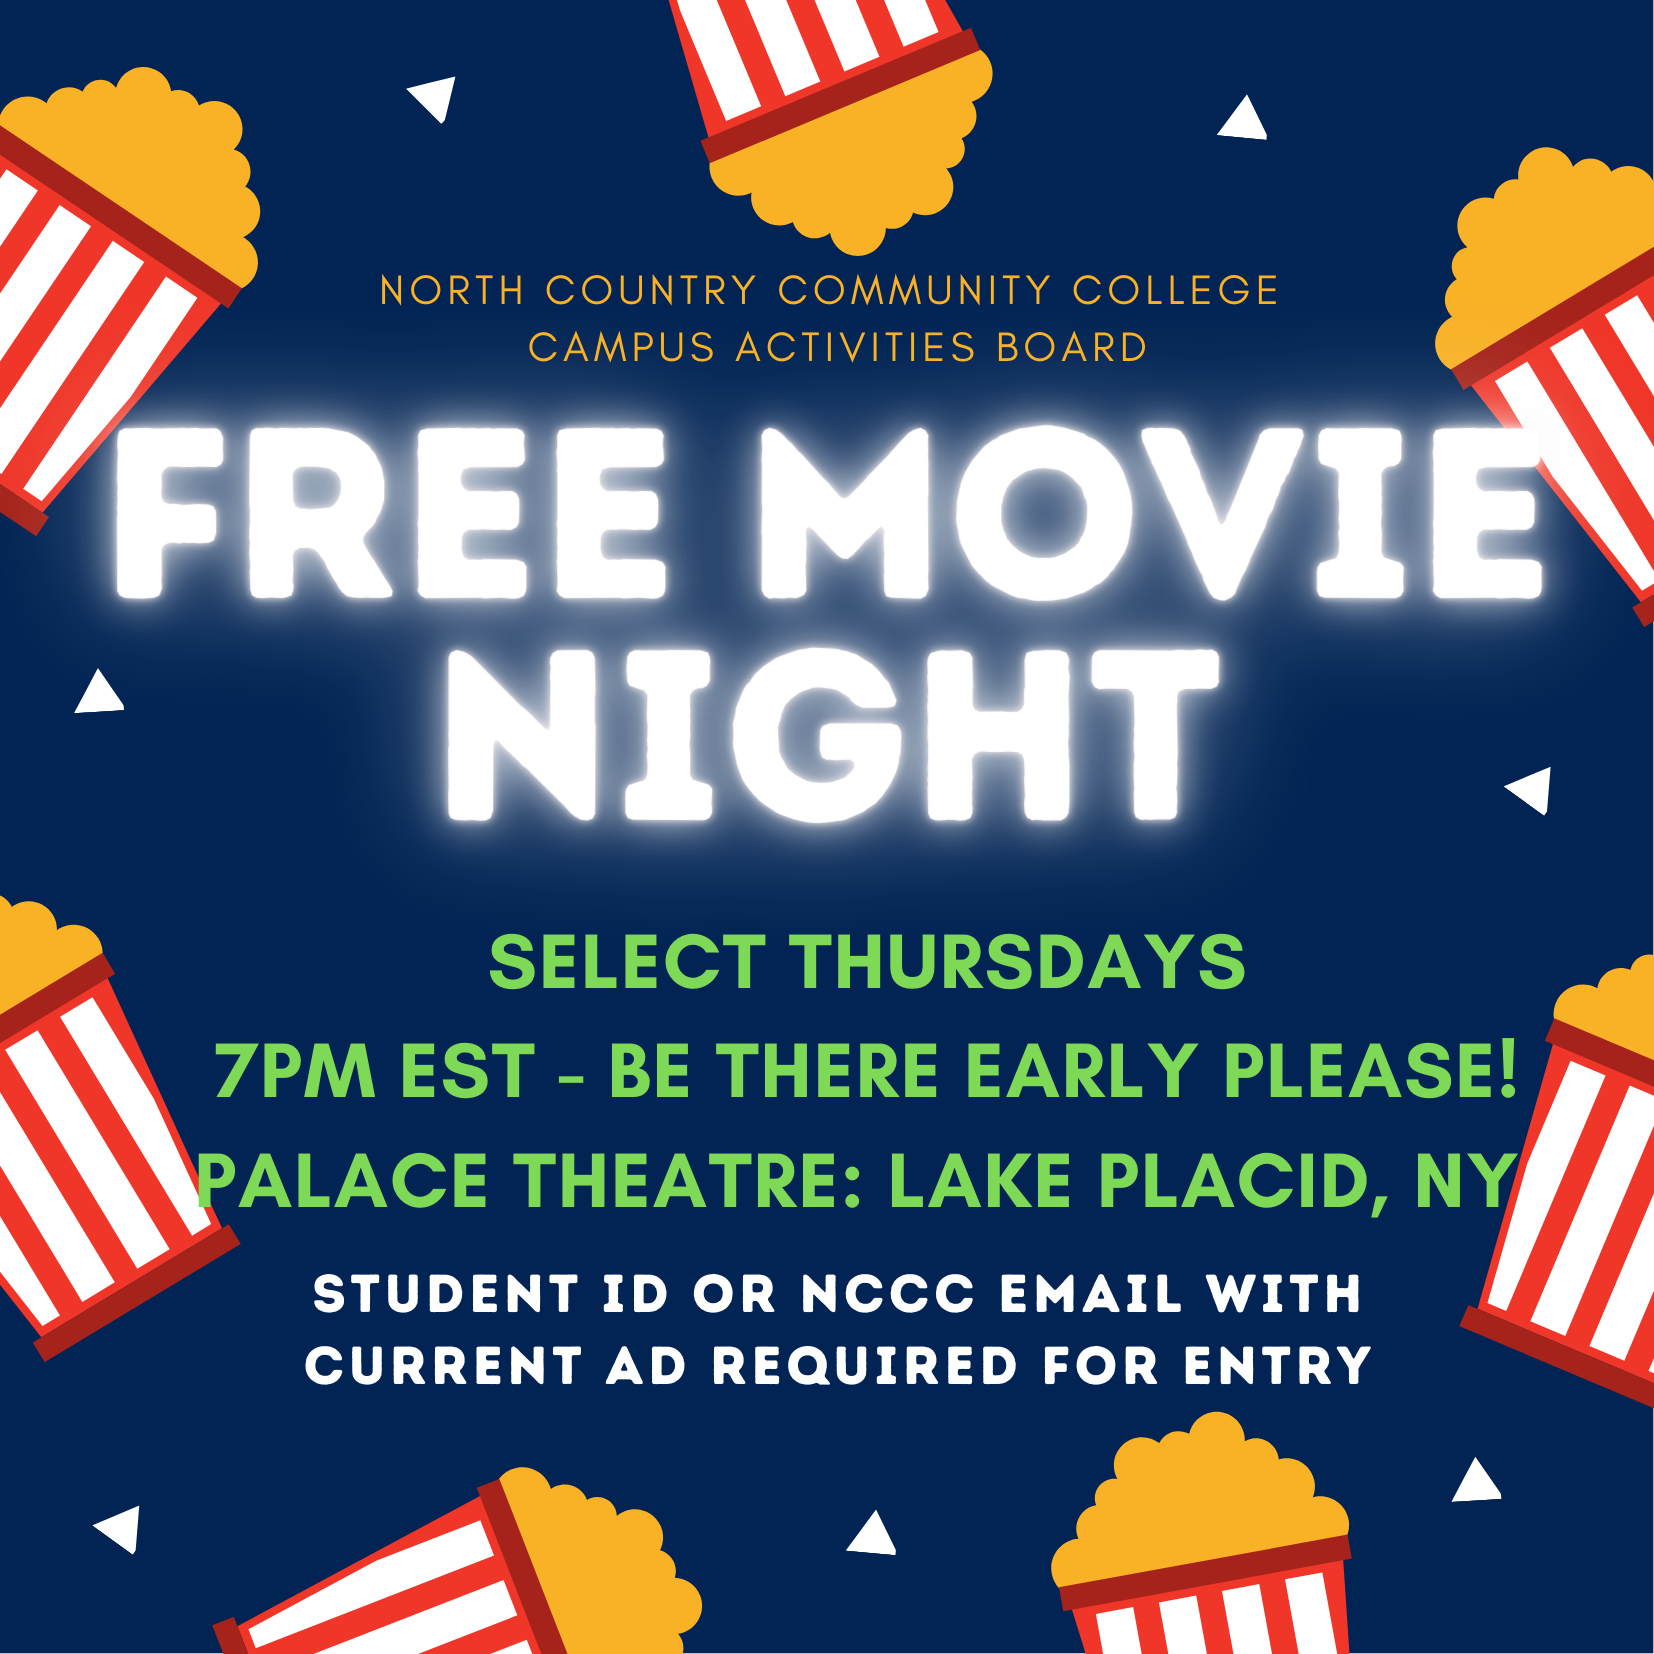 Lake Placid Theatre Free Movie Night for NCCC